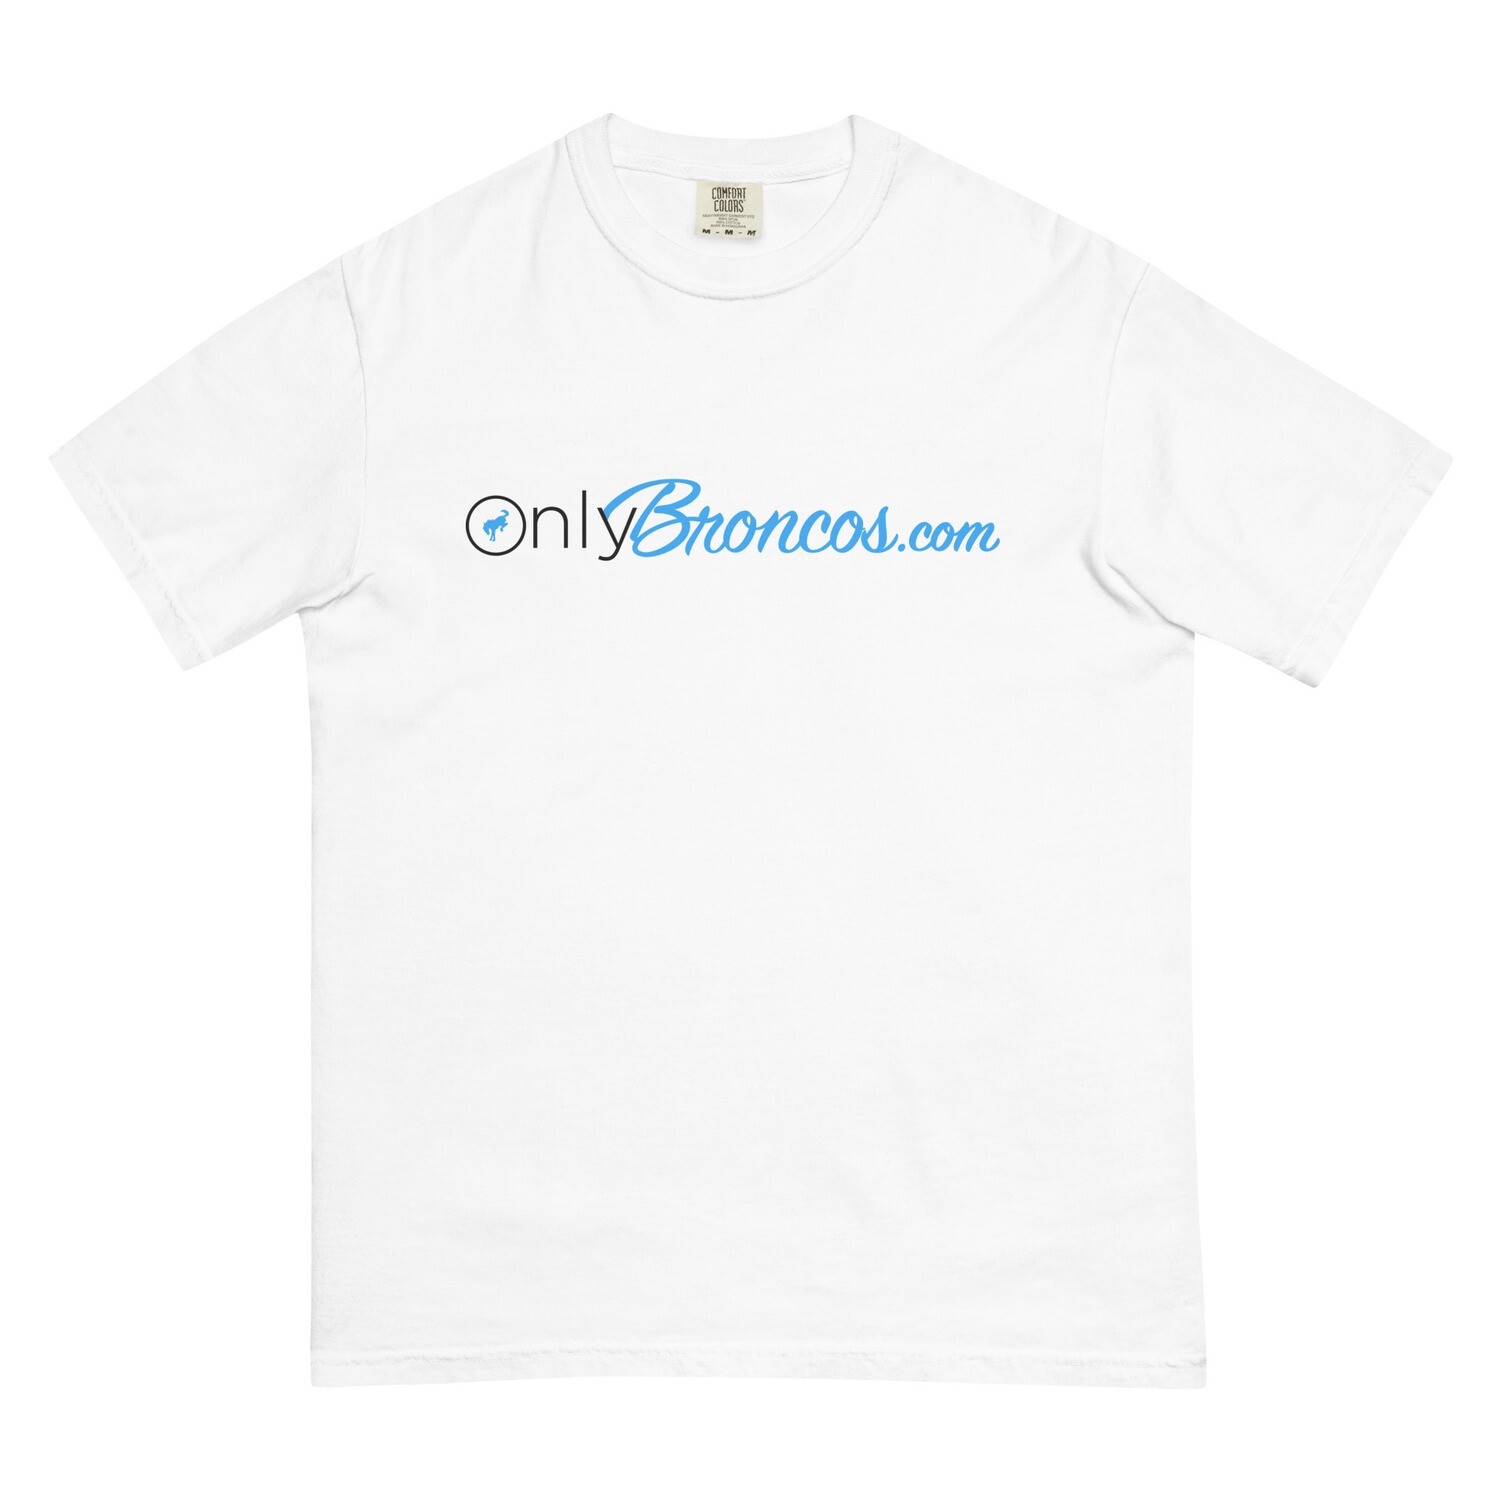 OnlyBroncos t-shirt